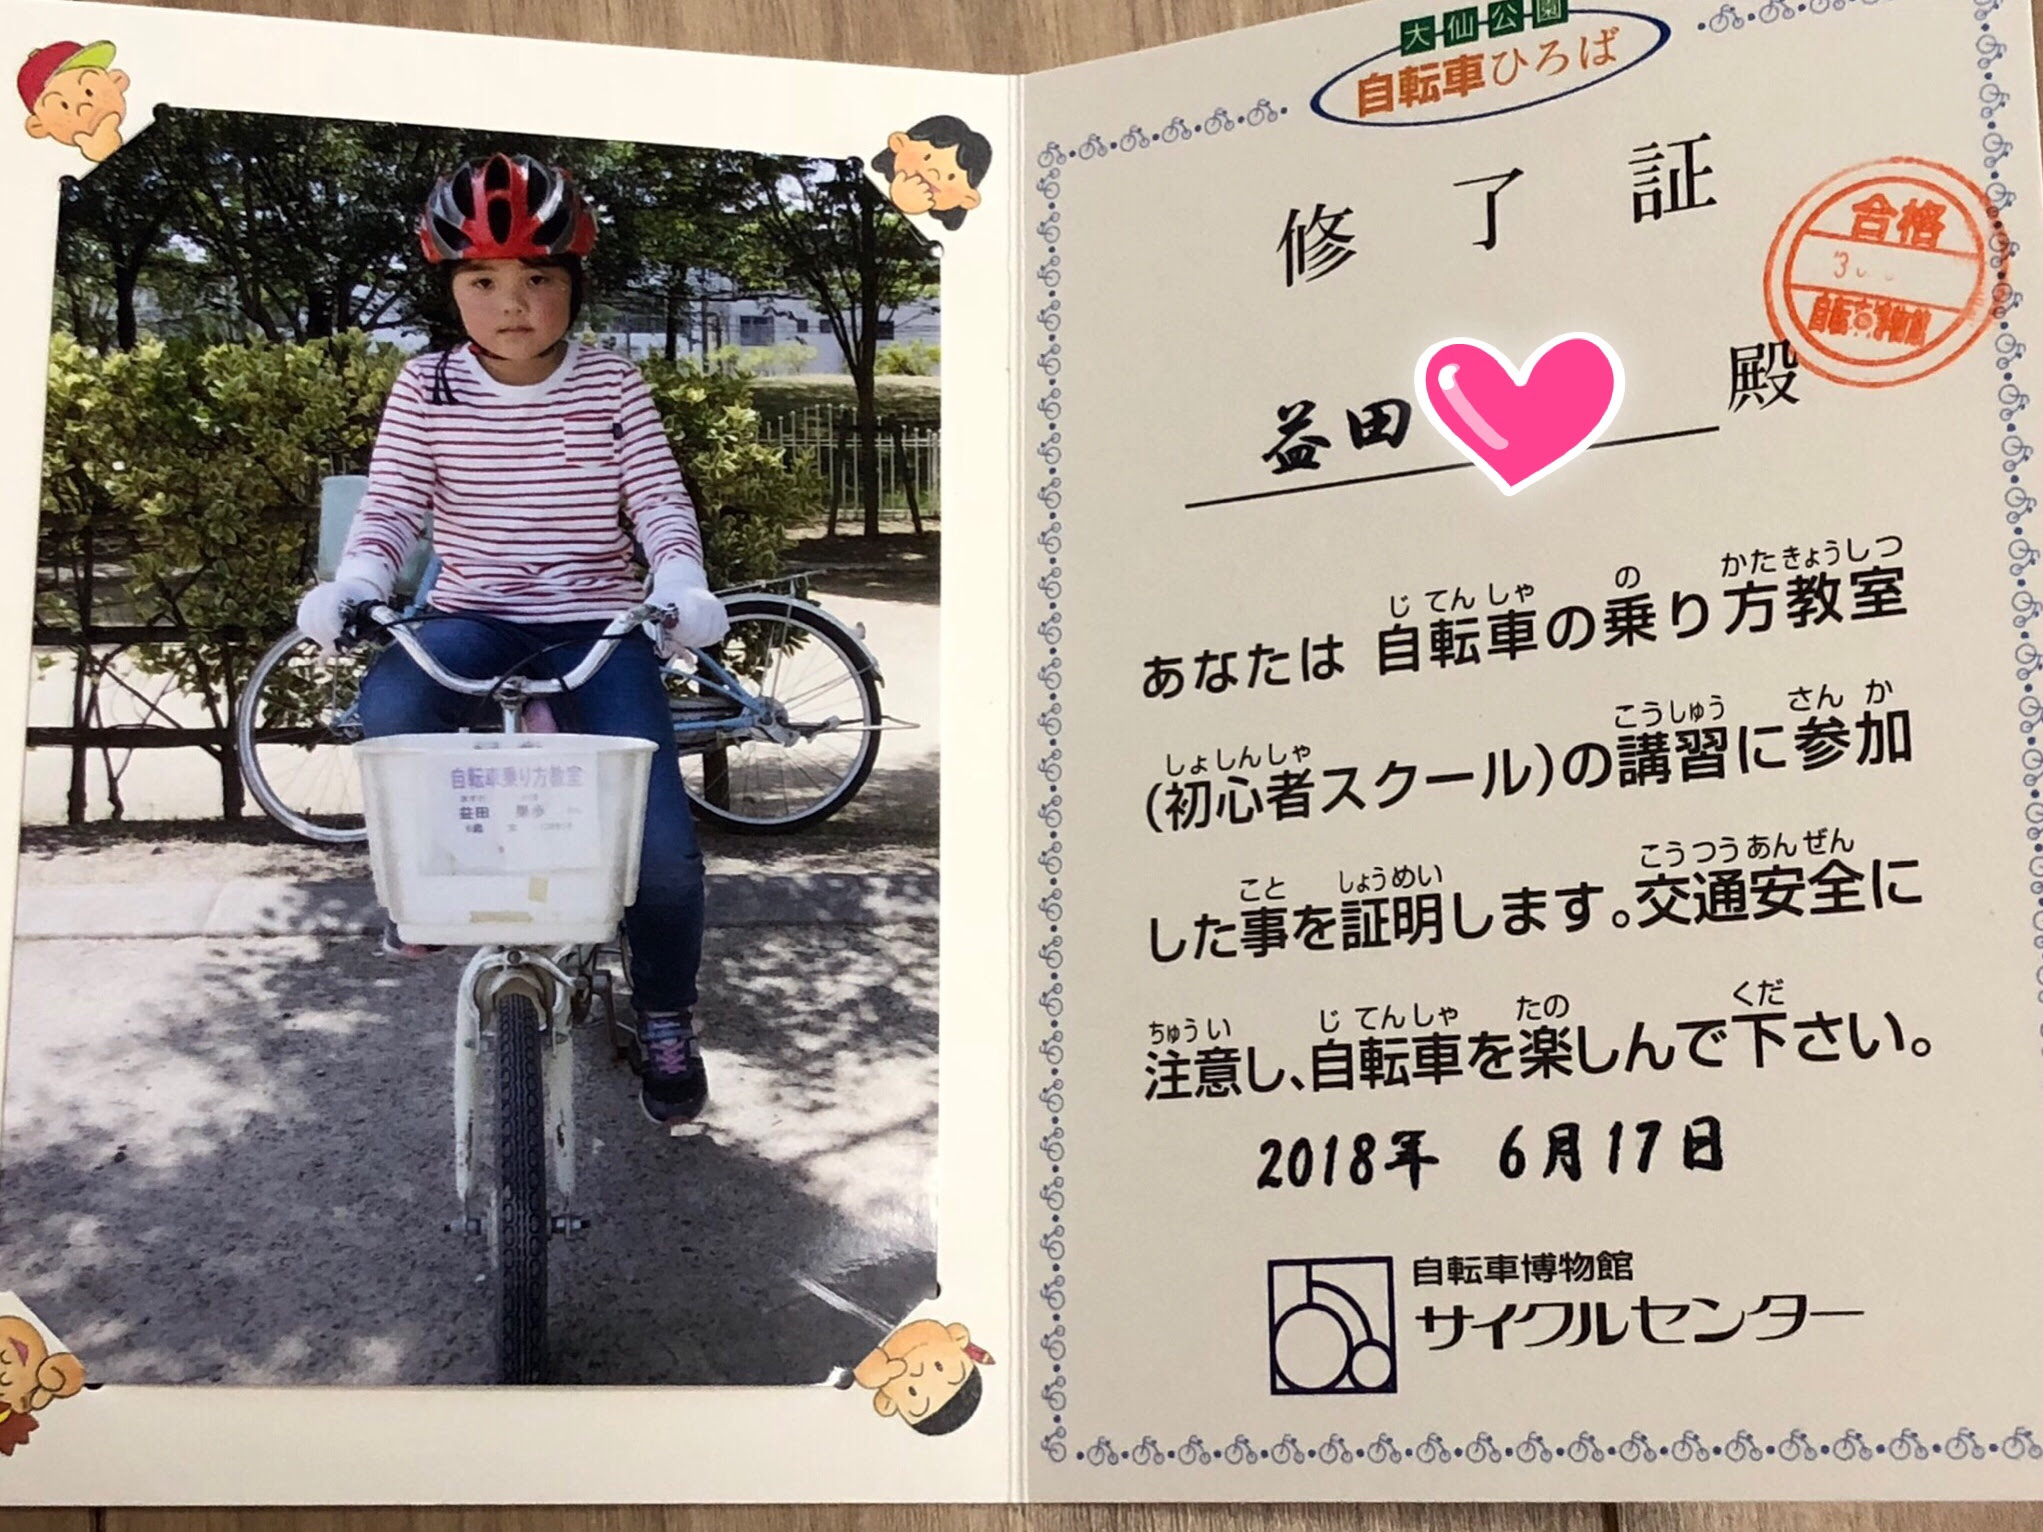 大人 自転車乗り方教室 大阪